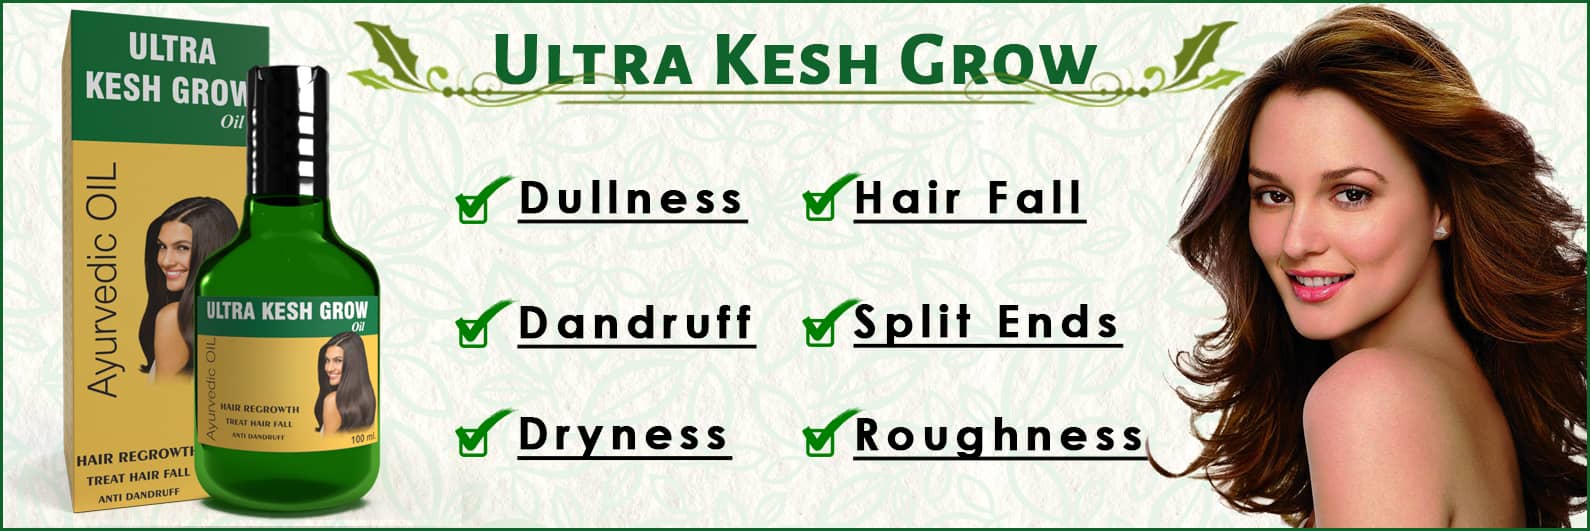 Buy best quality ayurvedic hair oil for hair growth, hair loss, dandruff